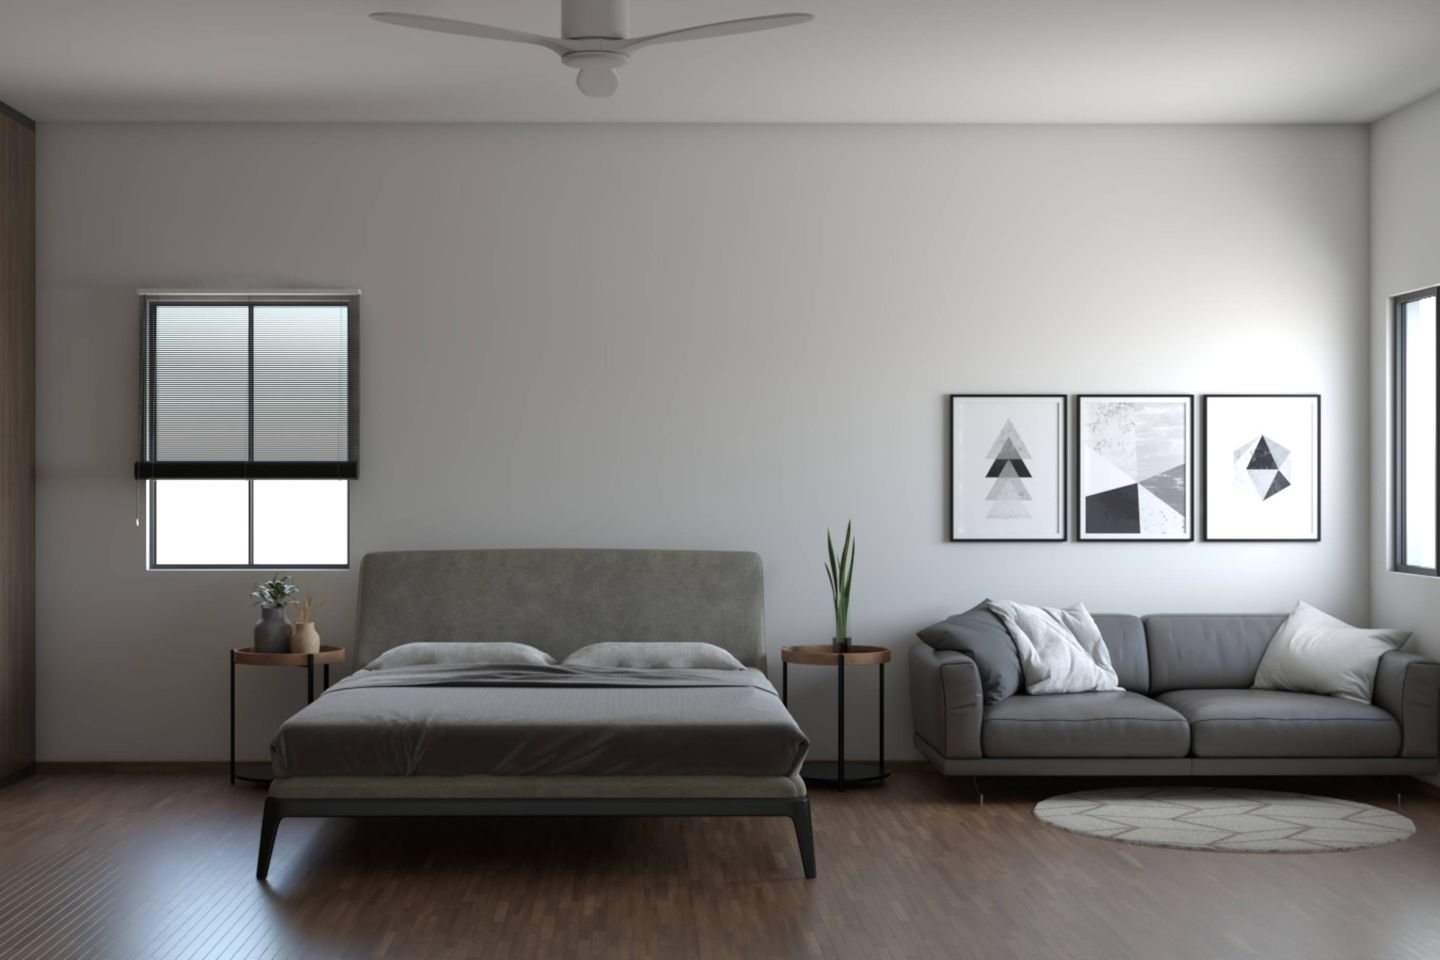 Bedroom Design With A Grey Sofa - Livspace